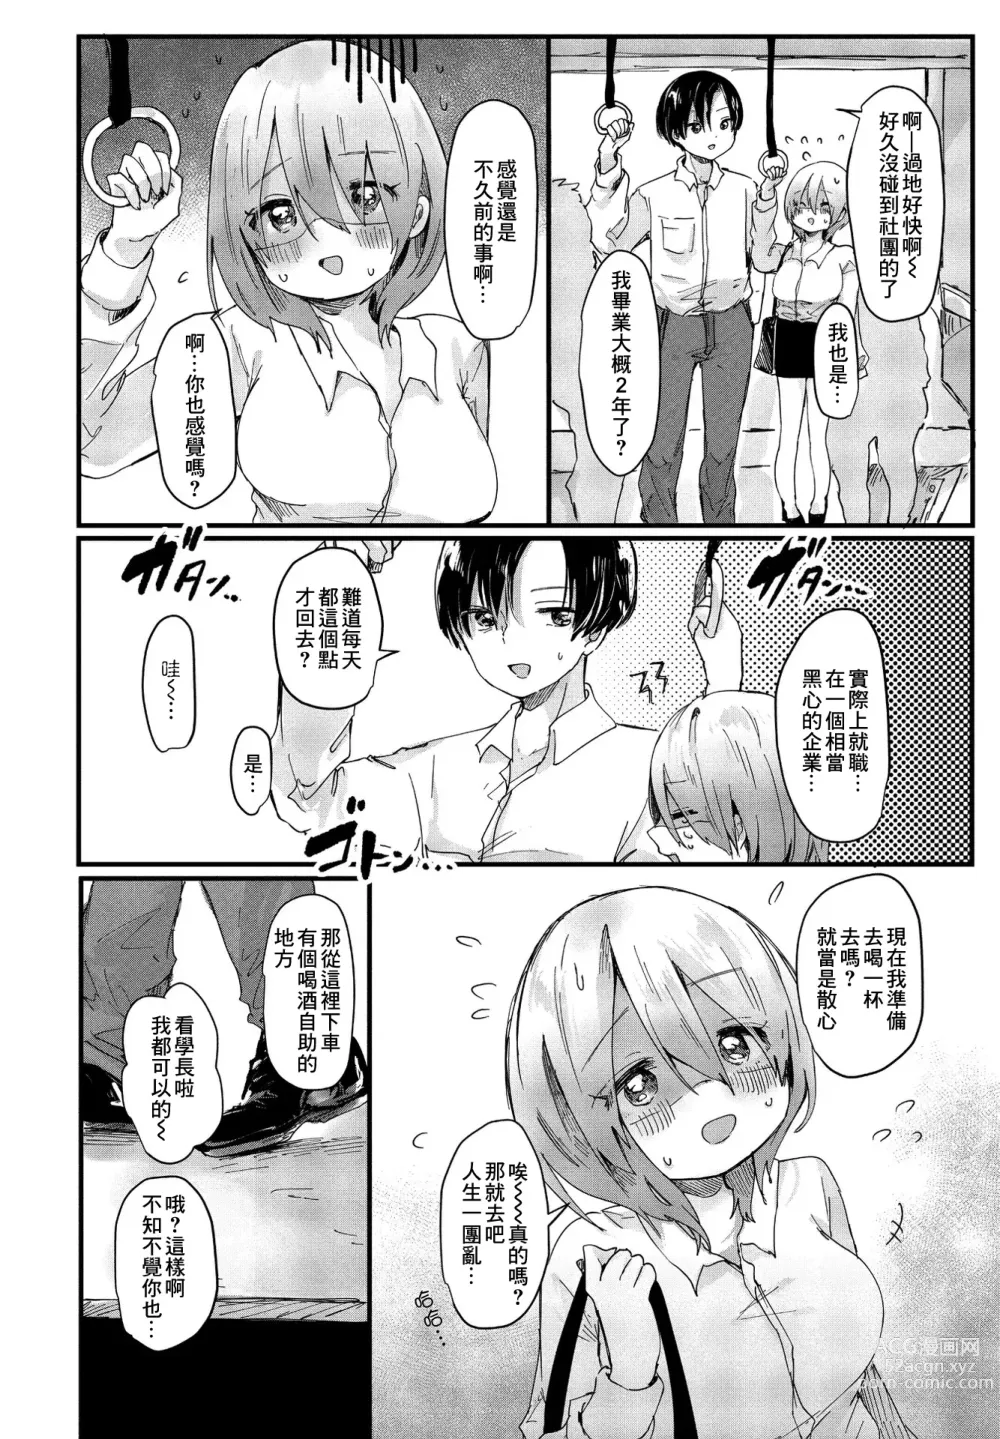 Page 2 of manga 回家路上碰到了學妹的那些事